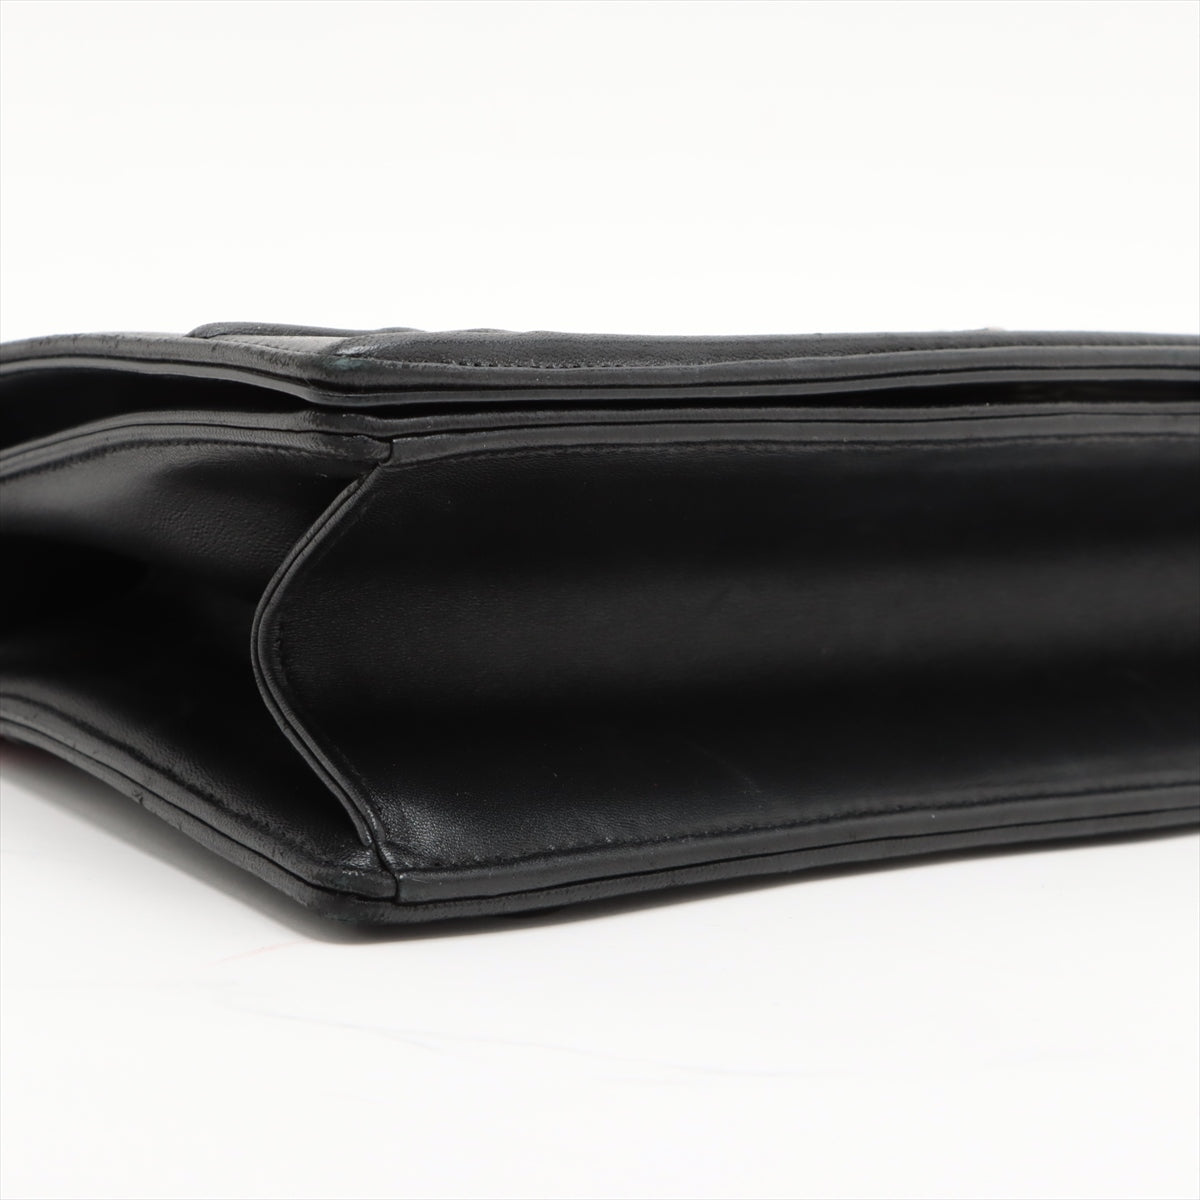 Christian Dior Diorama Sequins x leather Chain shoulder bag Black